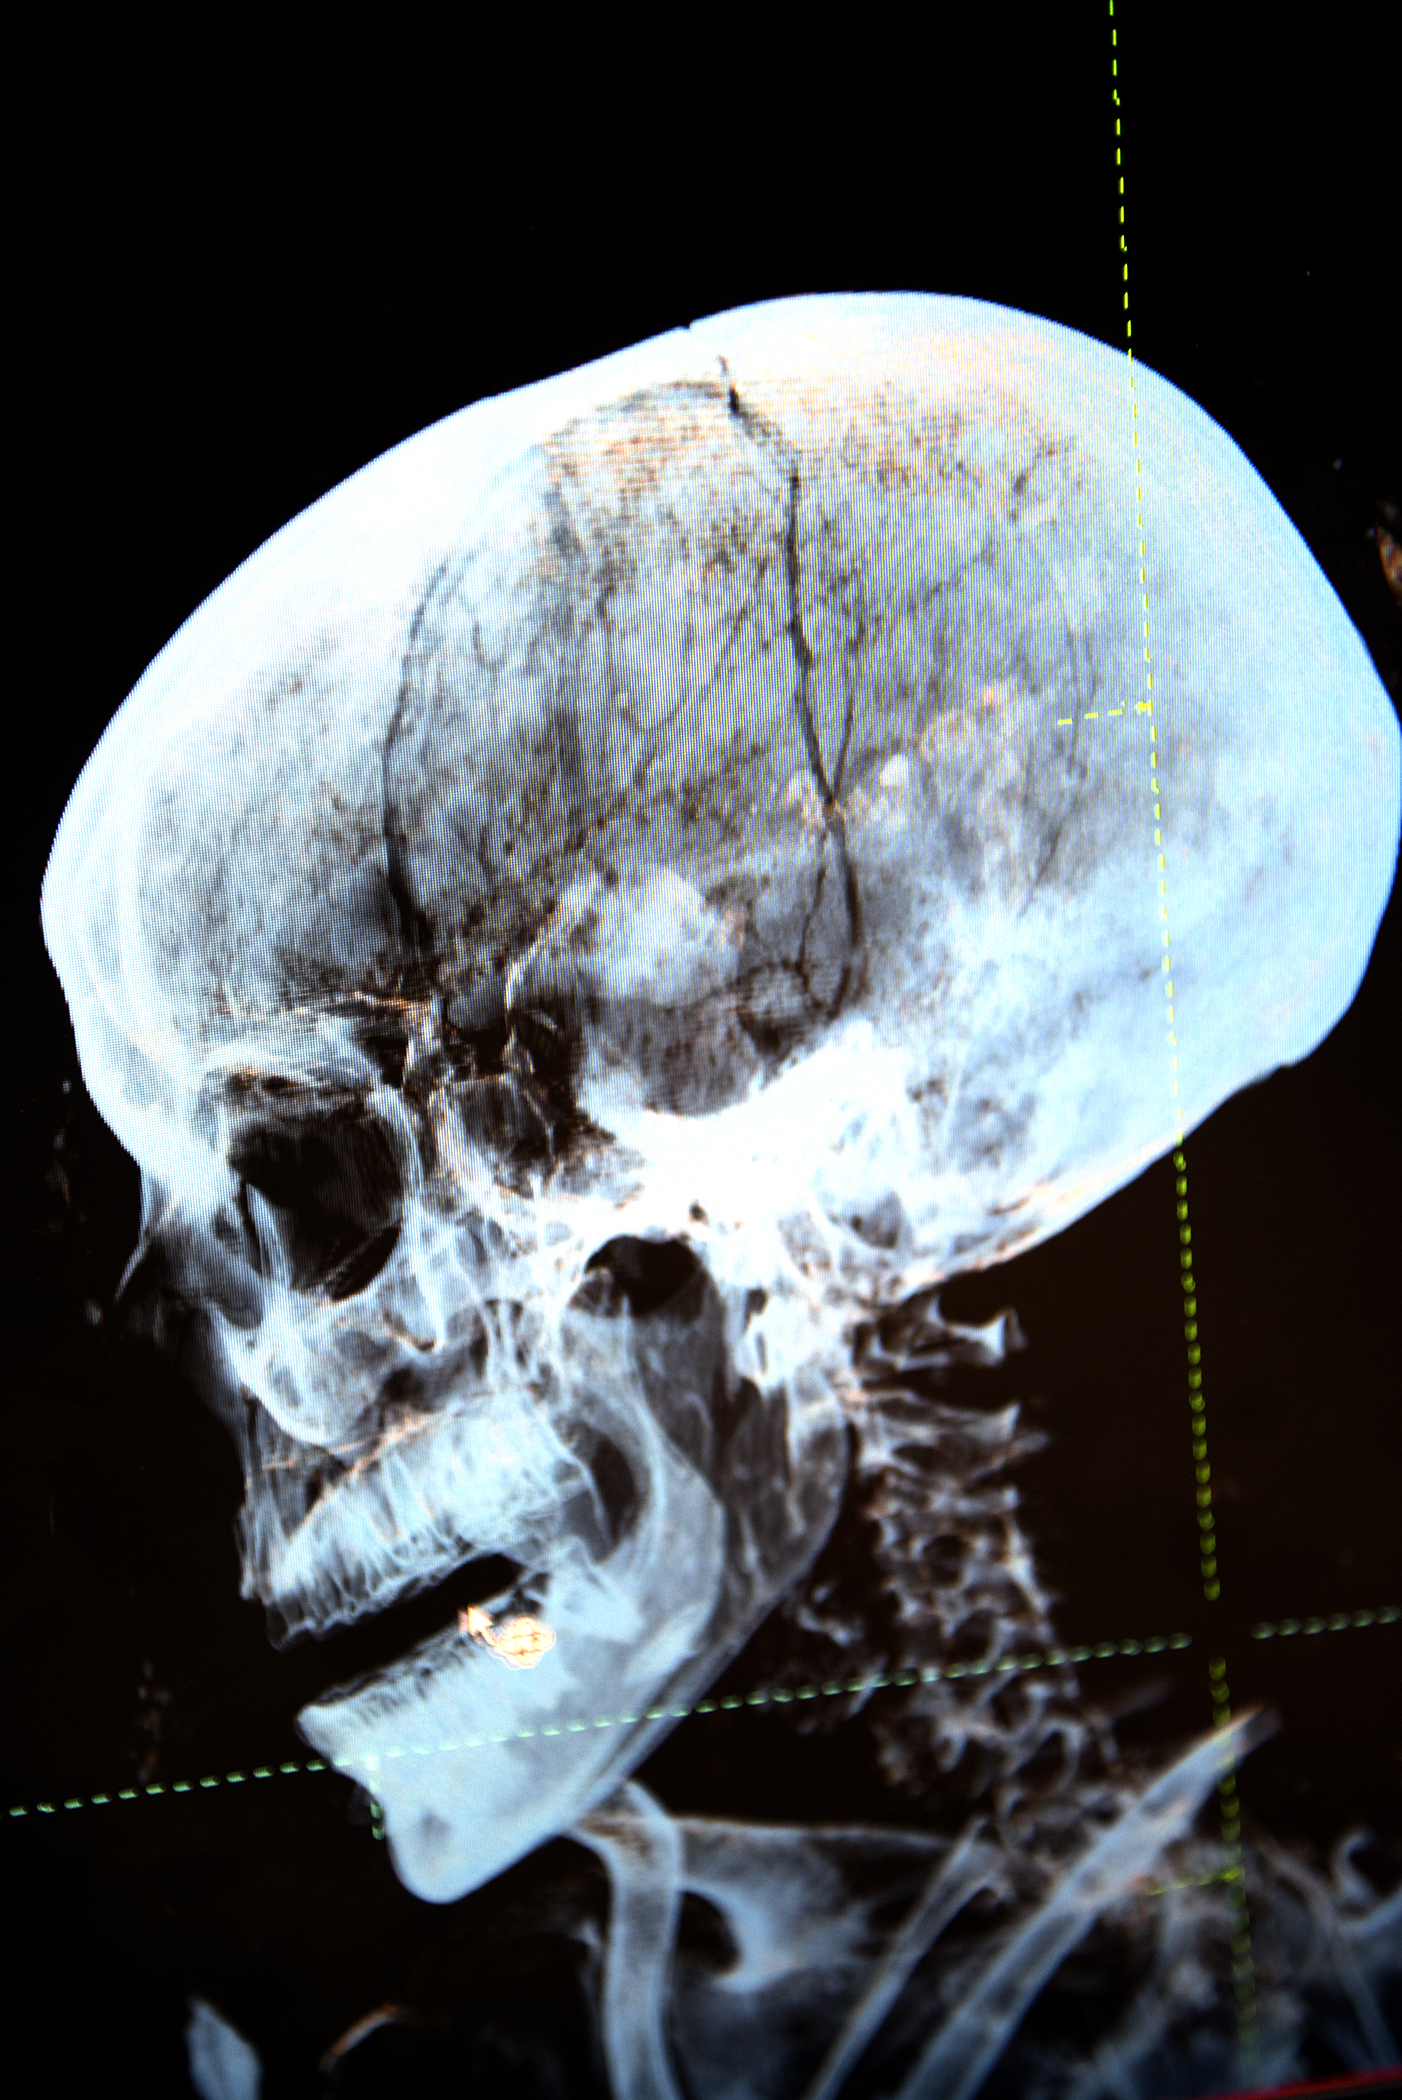 Henut-Wedjebu's intact brain is visible in blue. Credit: Washington University Mallinckrodt Institute of Radiology